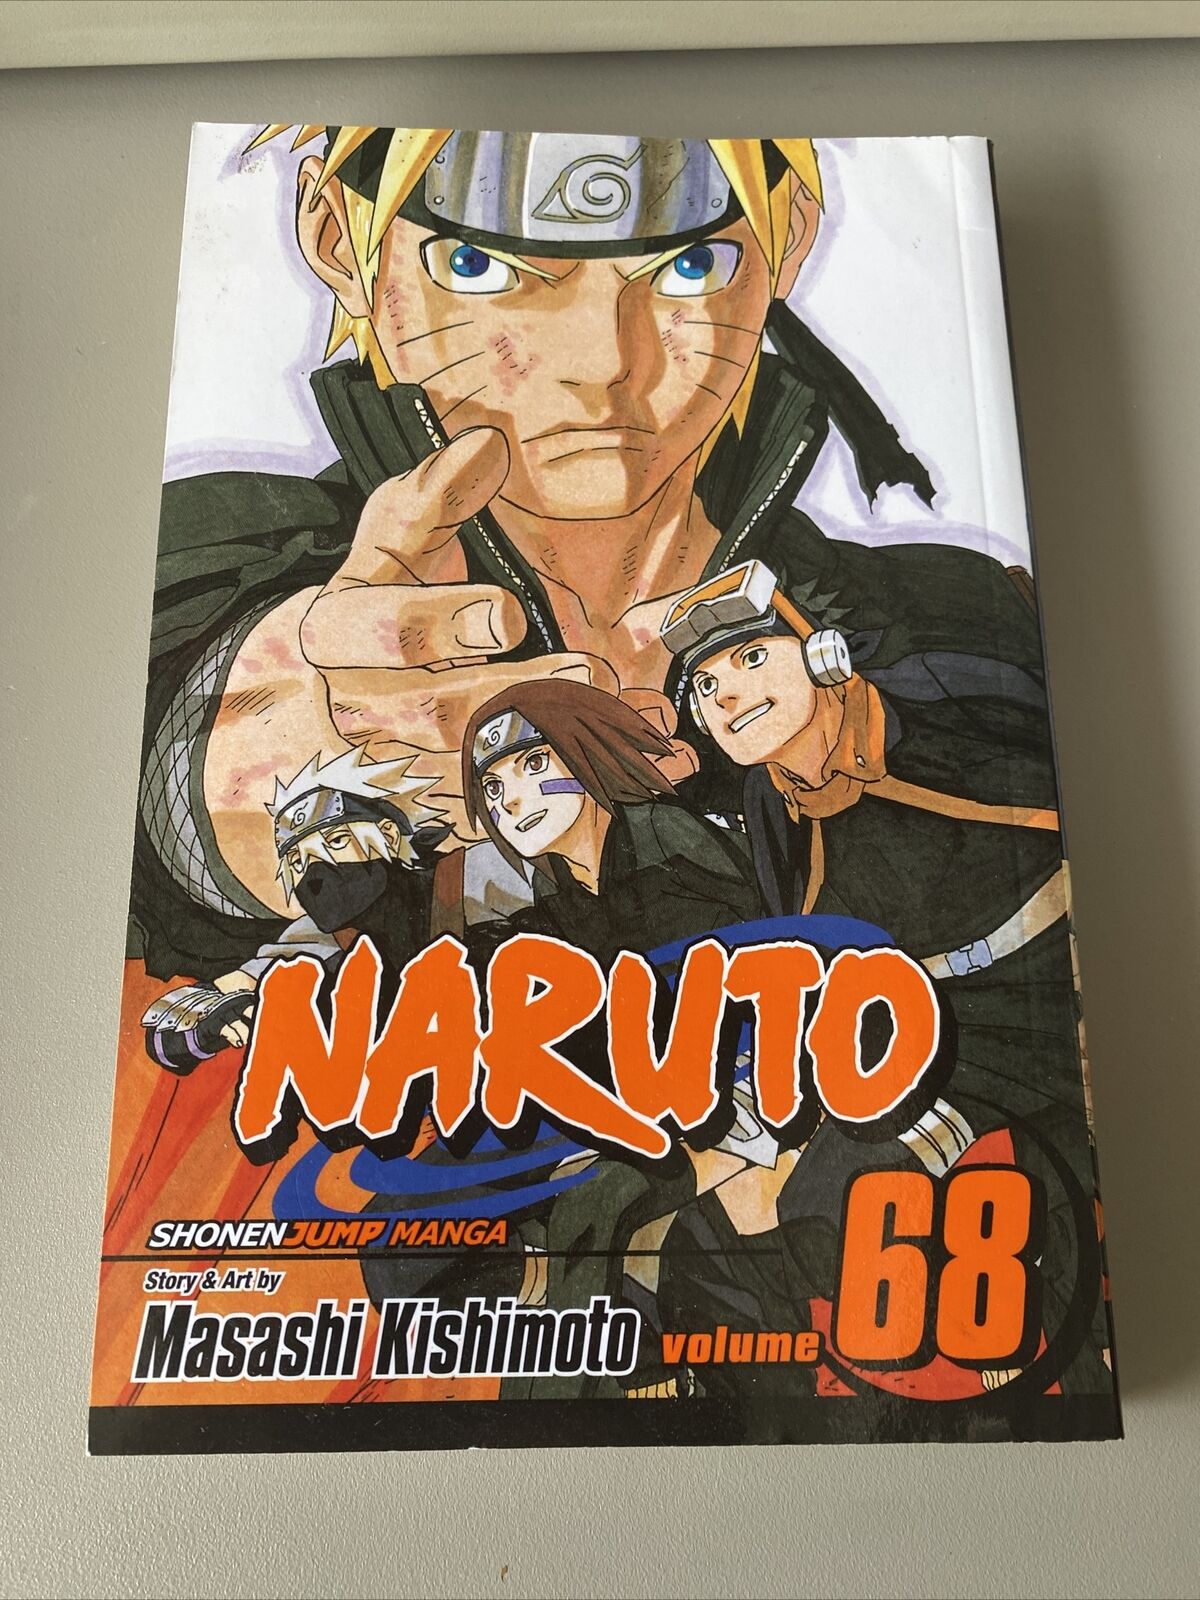 Naruto Volume 68 by Masashi Kishimoto - Shonen Jump Manga - 2014 First Printing